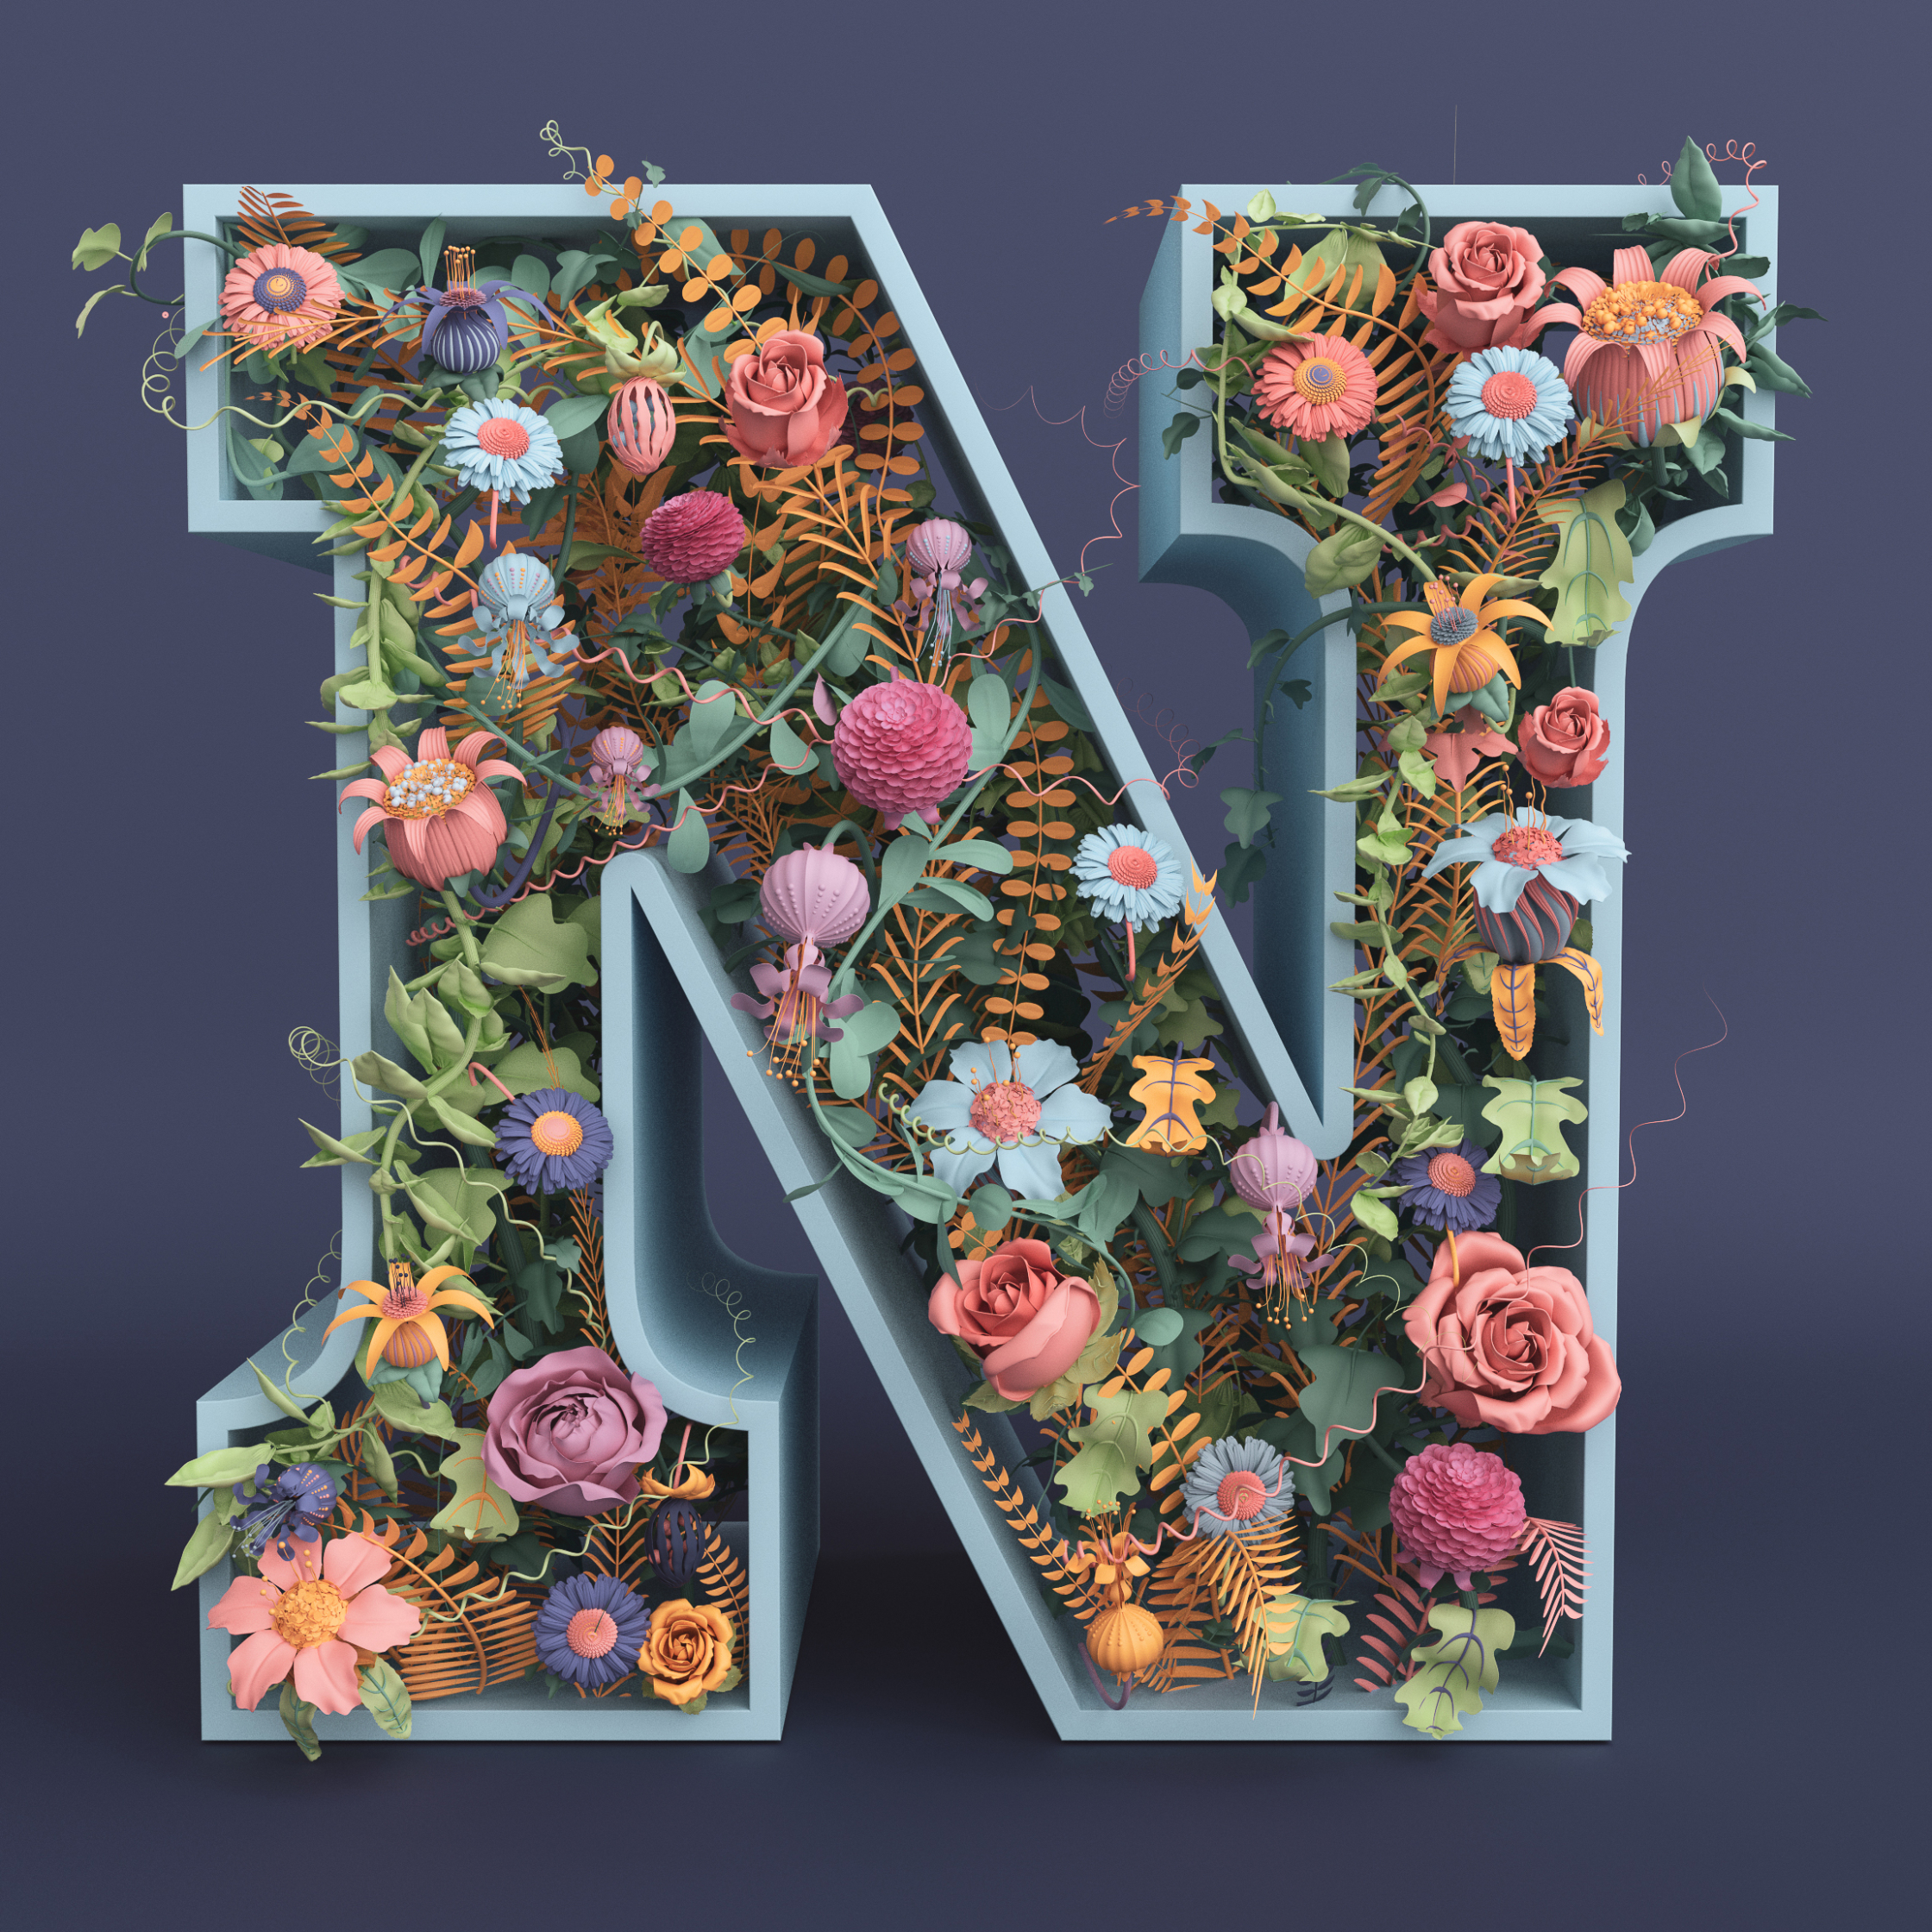 New N for nature.jpg